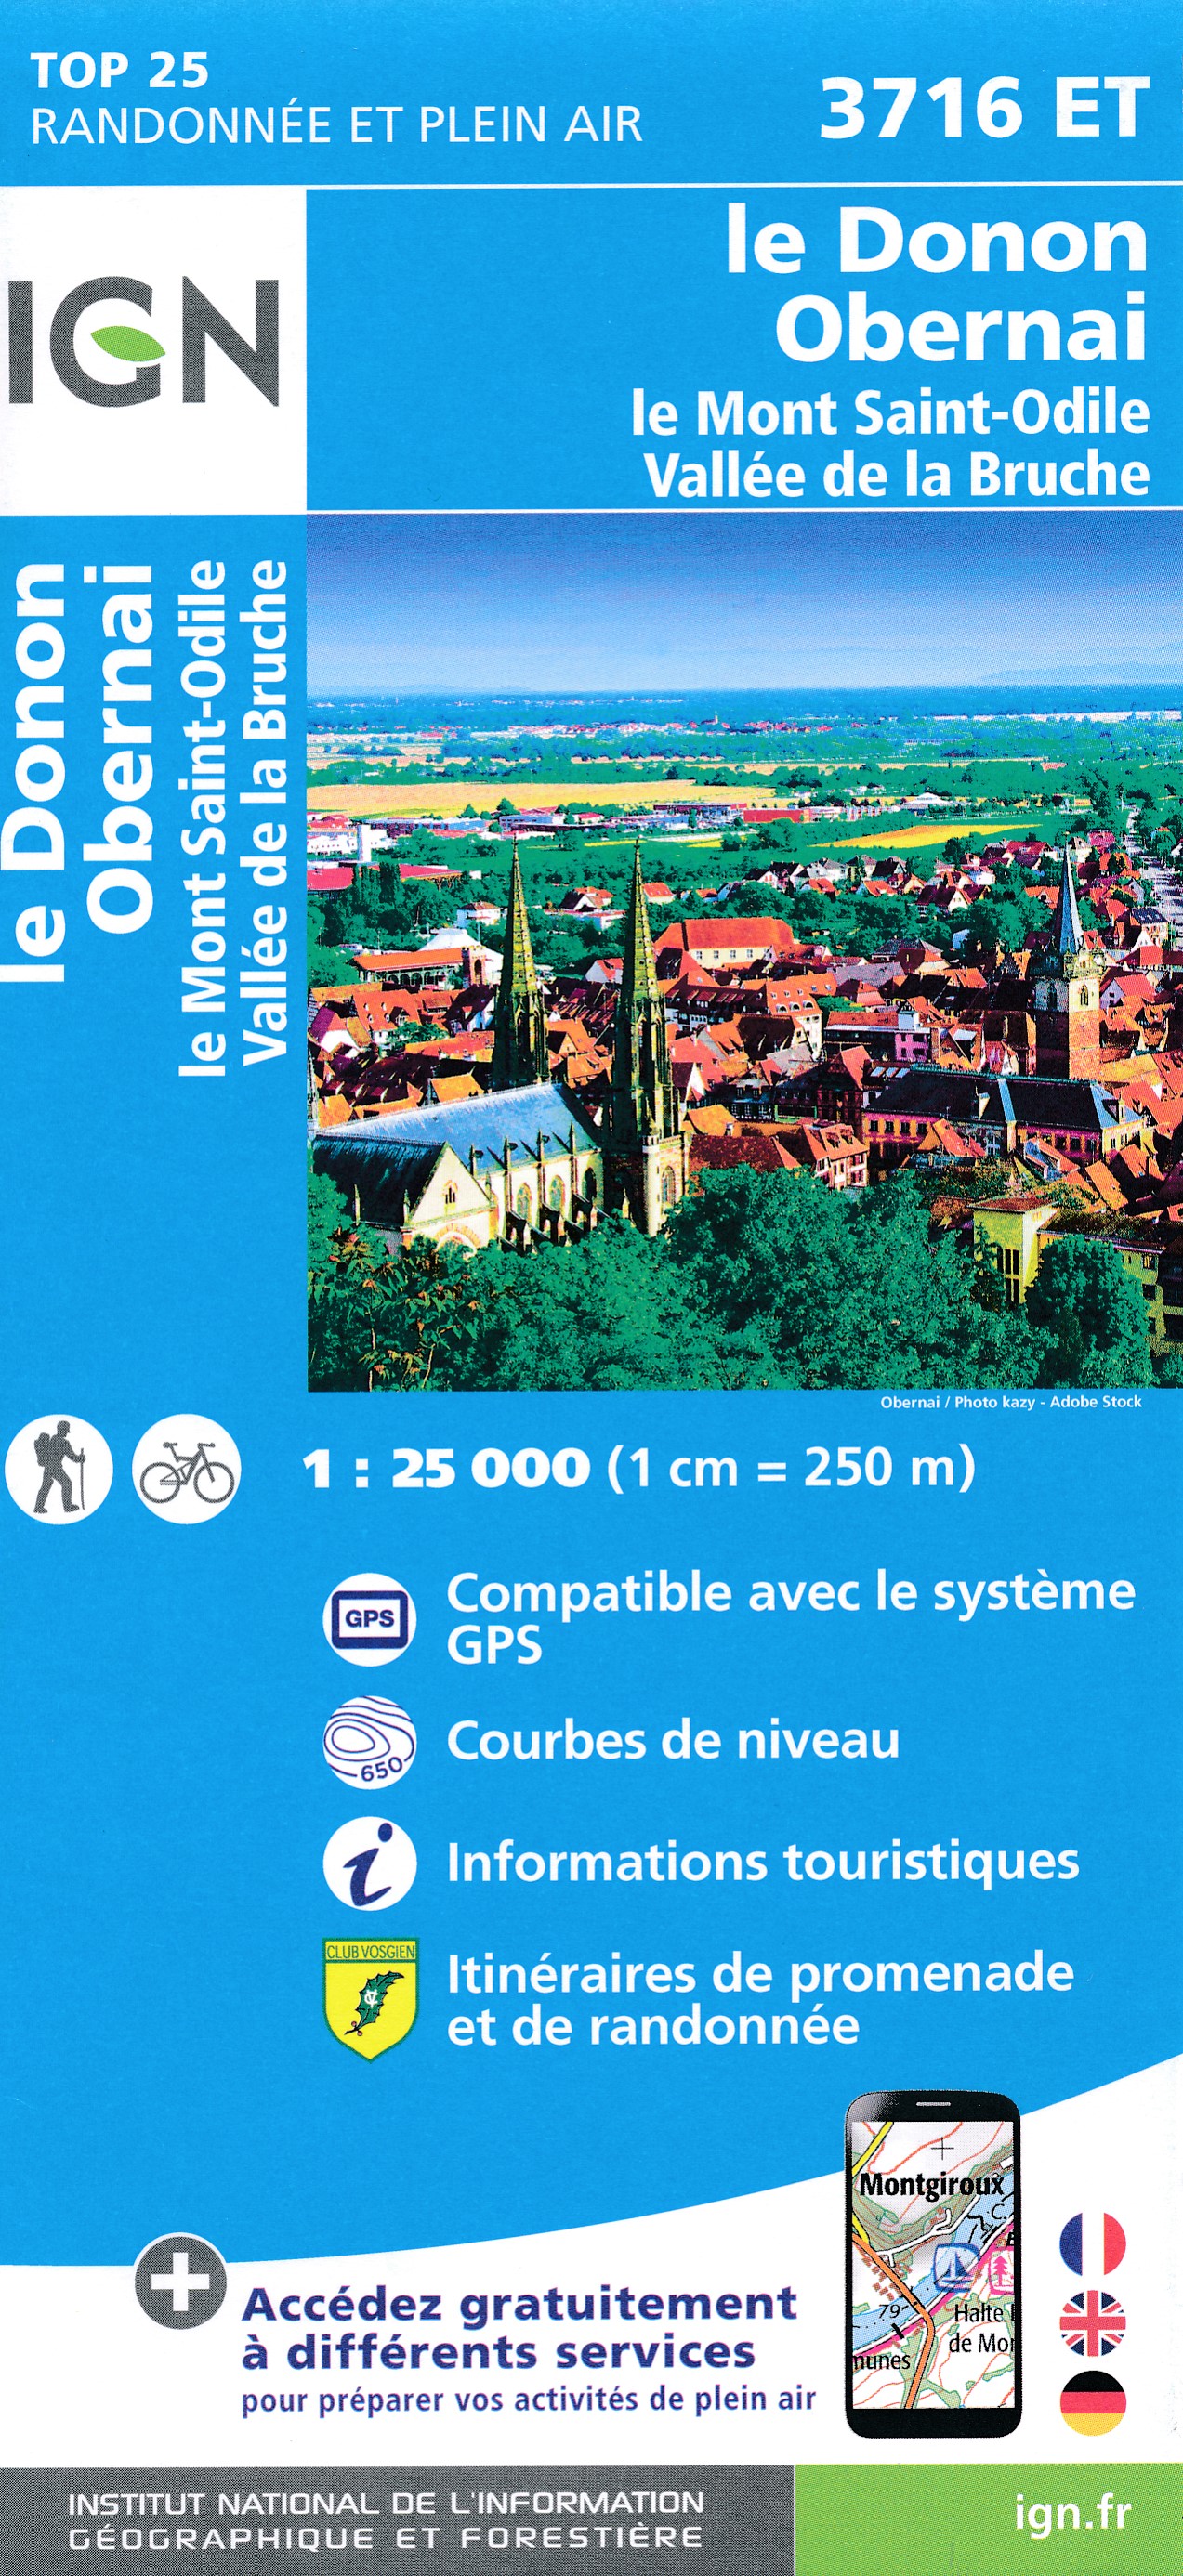 Online bestellen: Wandelkaart - Topografische kaart 3716ET le Donon, Obernai, Mont Ste-Odile | IGN - Institut Géographique National